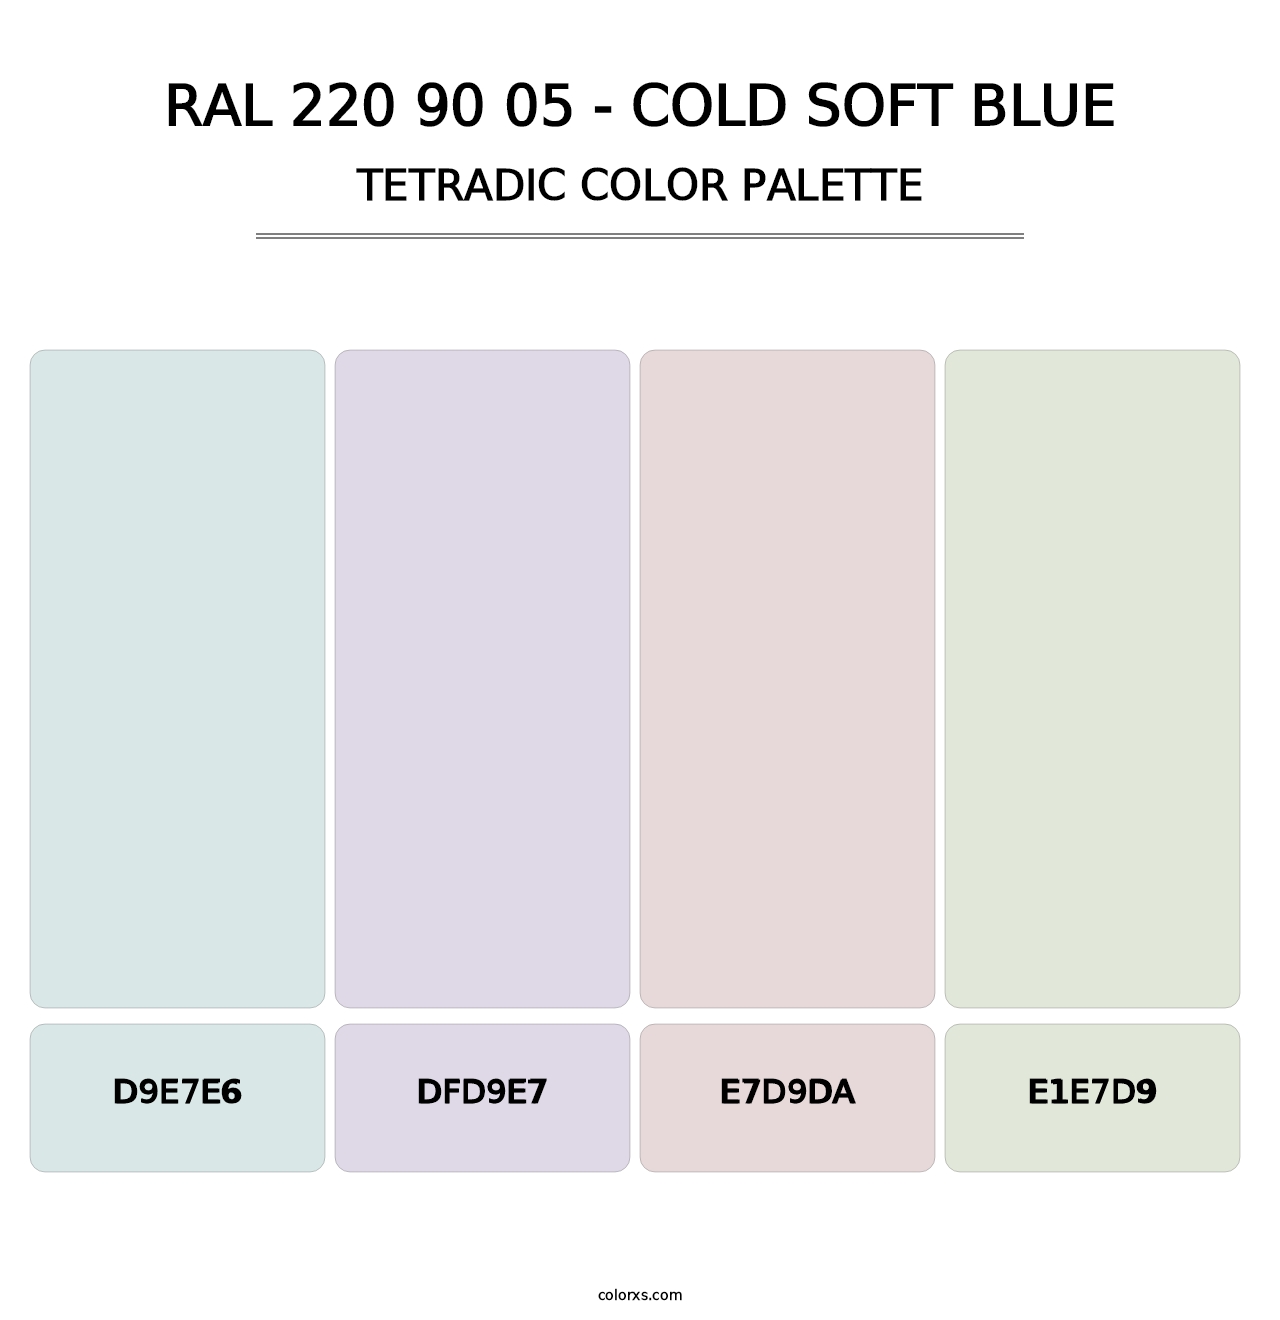 RAL 220 90 05 - Cold Soft Blue - Tetradic Color Palette